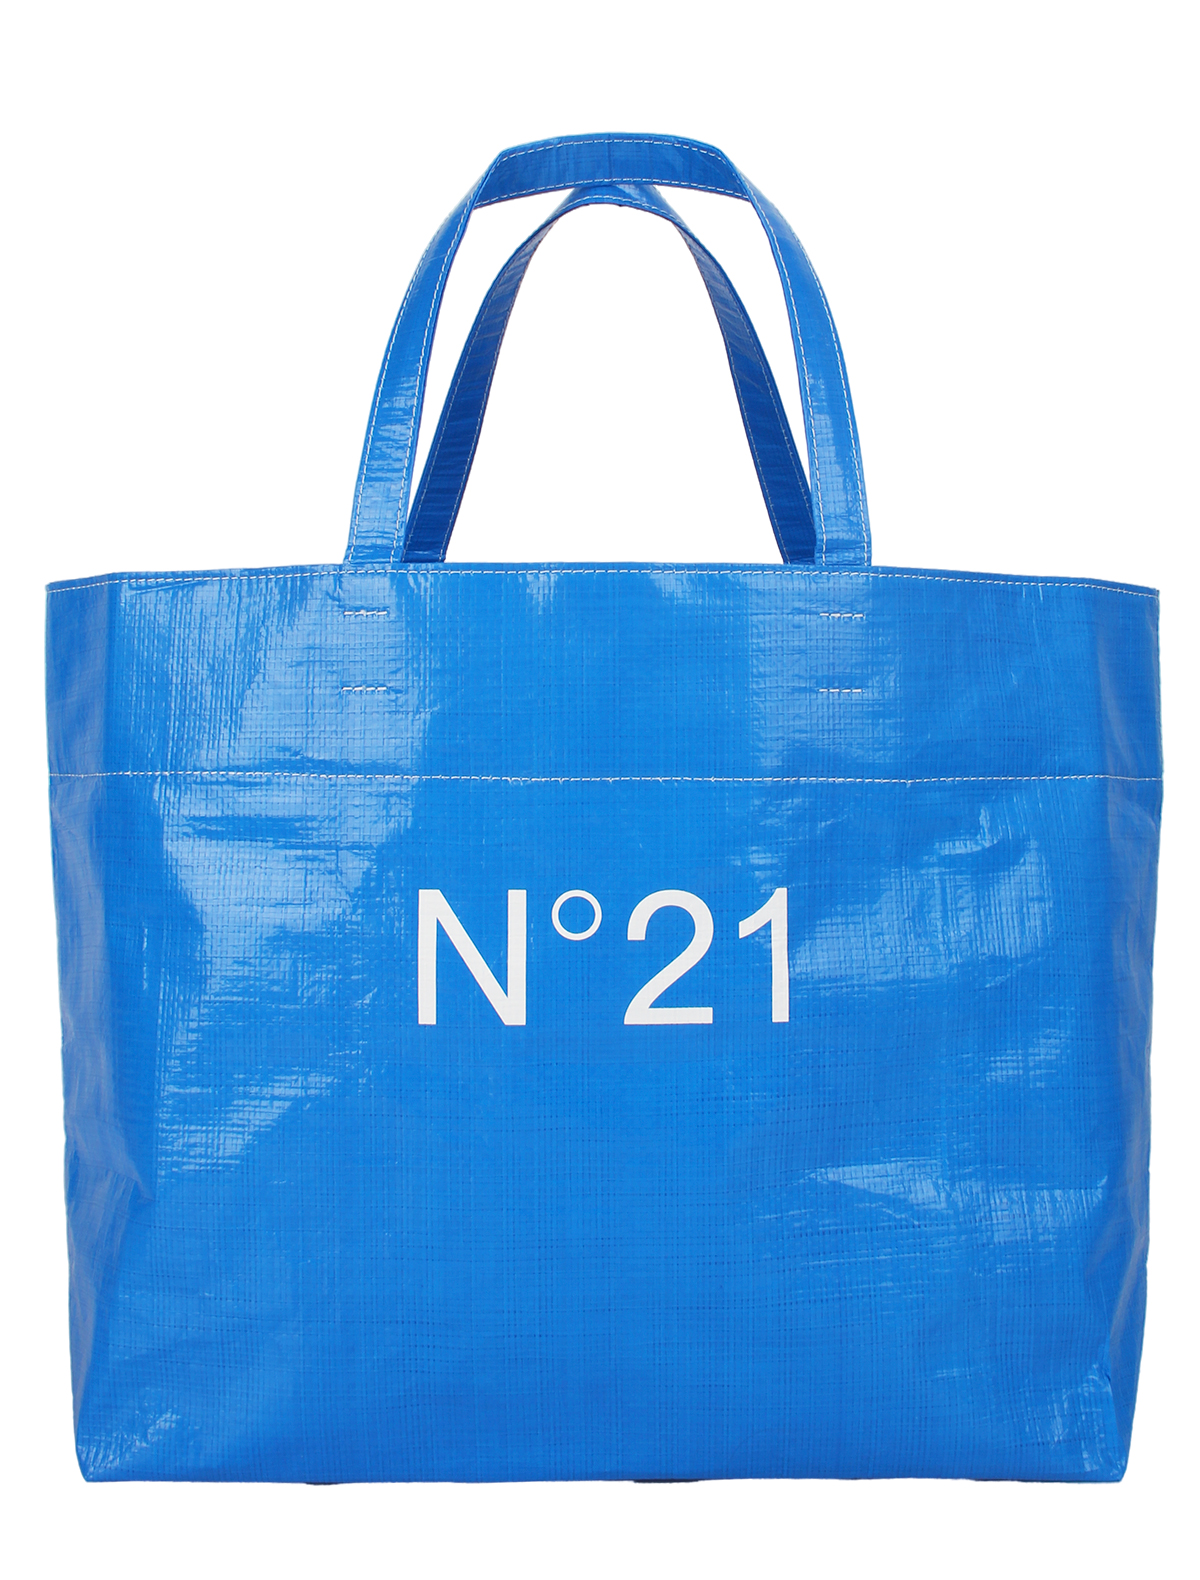 сумка n21 для девочки, синяя